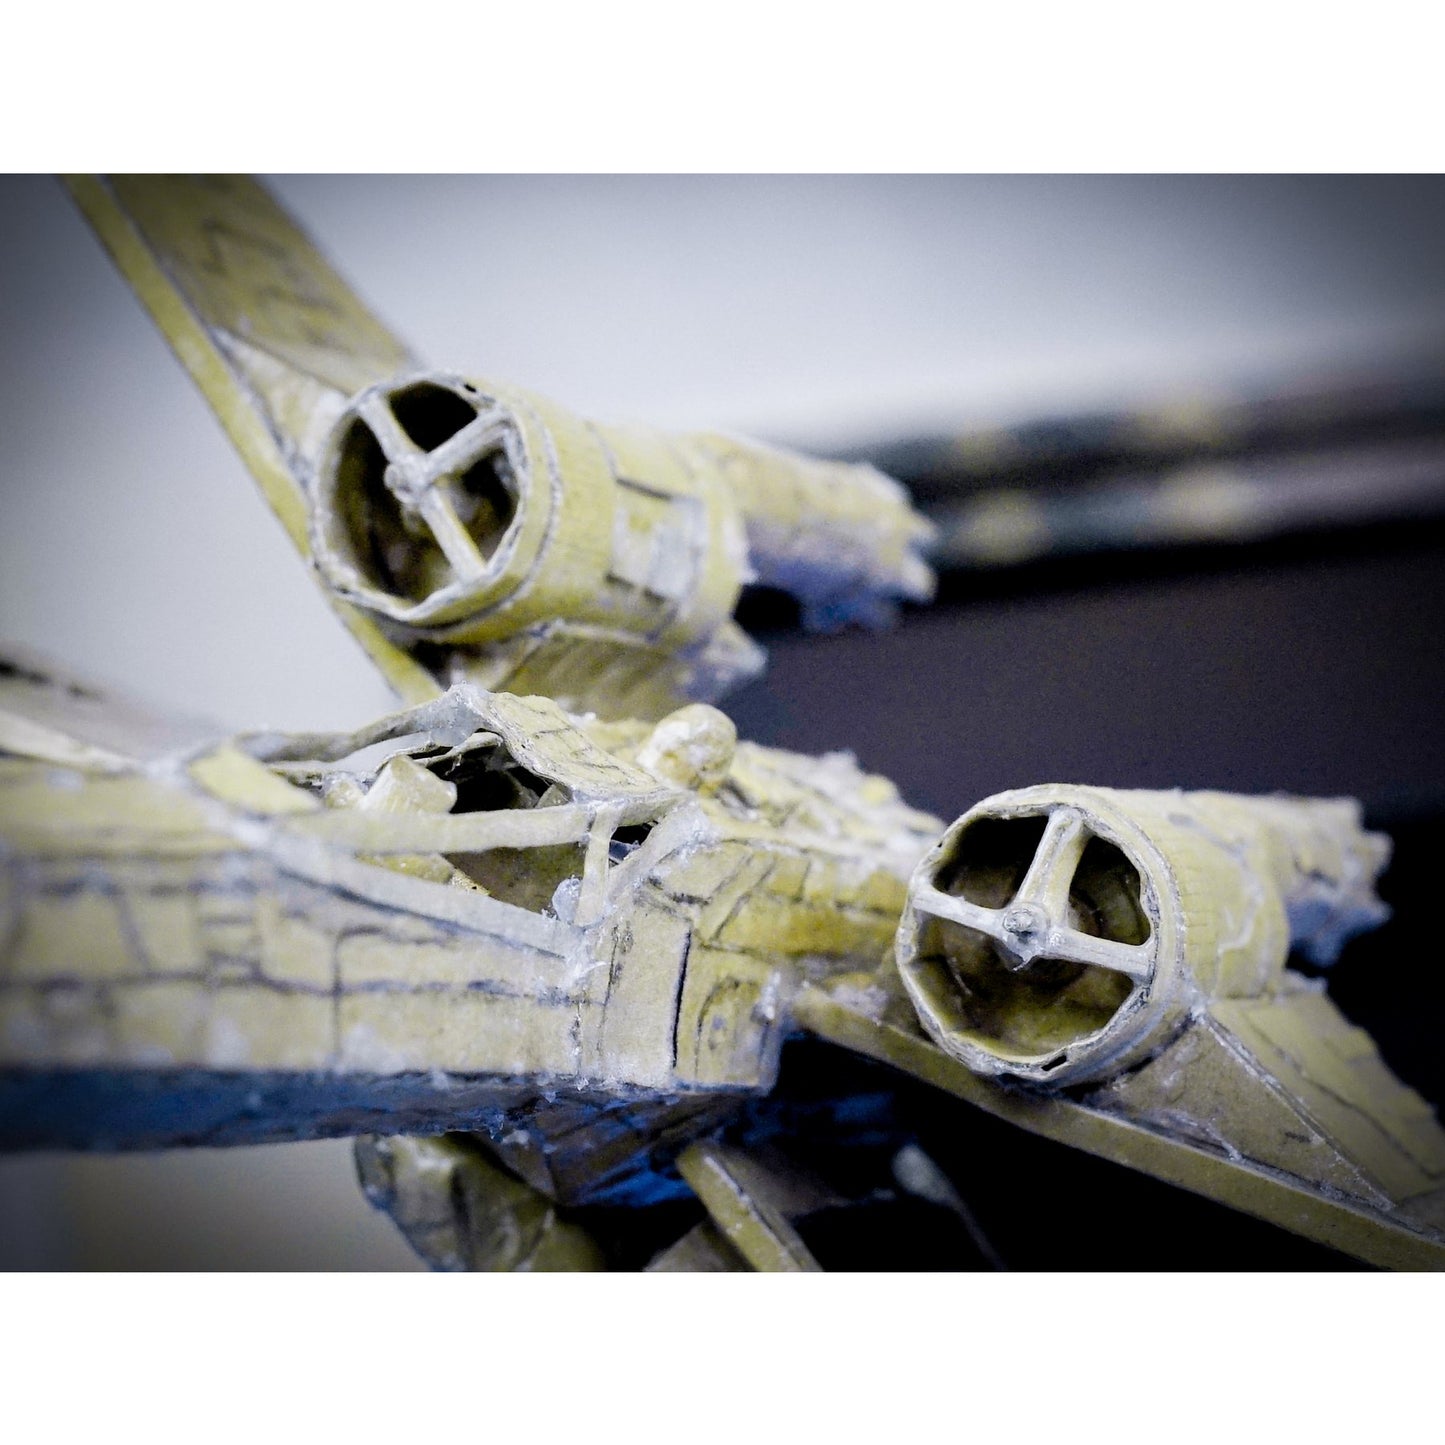 X-Wing Cardboard PLANS for cardboard DIY